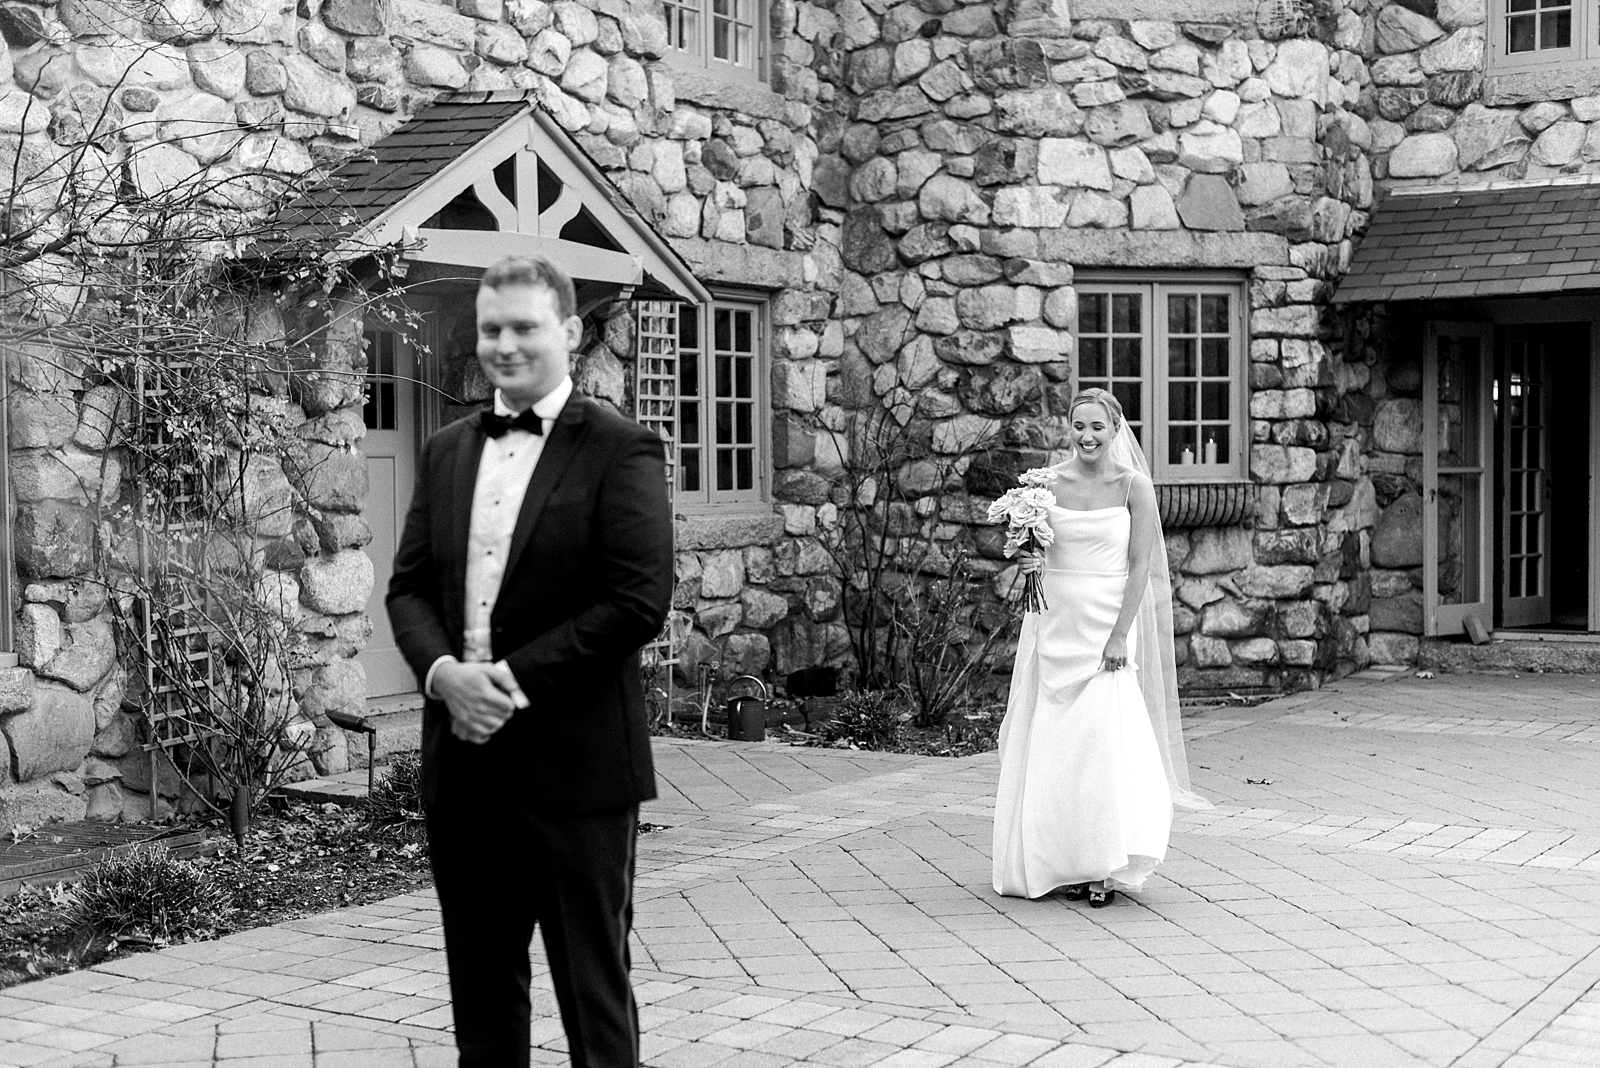 Winter Willowdale Estate Micro Wedding in Topsfield, MA by Boston Wedding Photographer Annmarie Swift